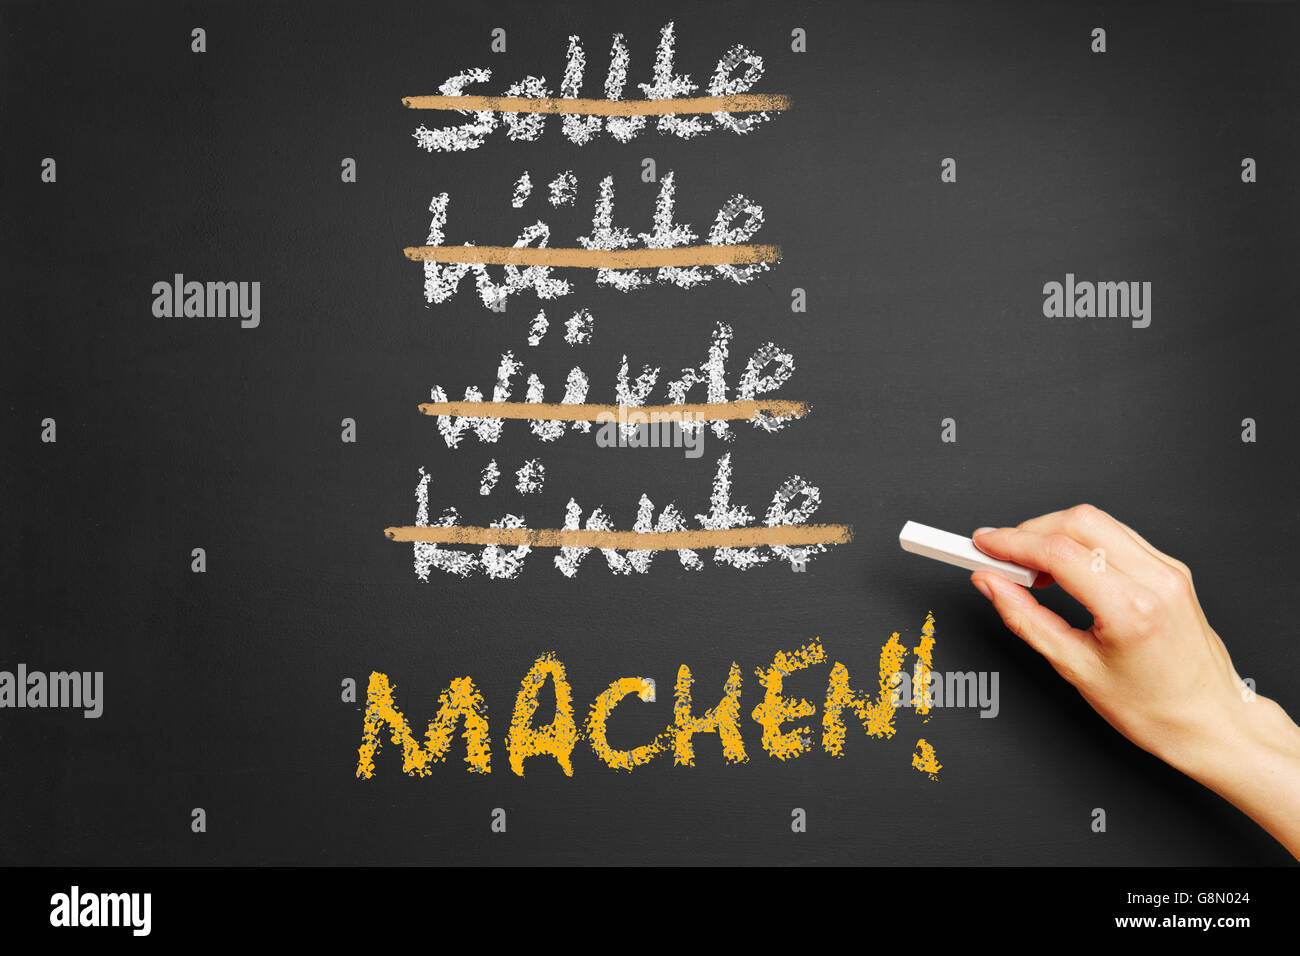 Hand writing motivational slogan in German (Do It) on a chalkboard Stock Photo